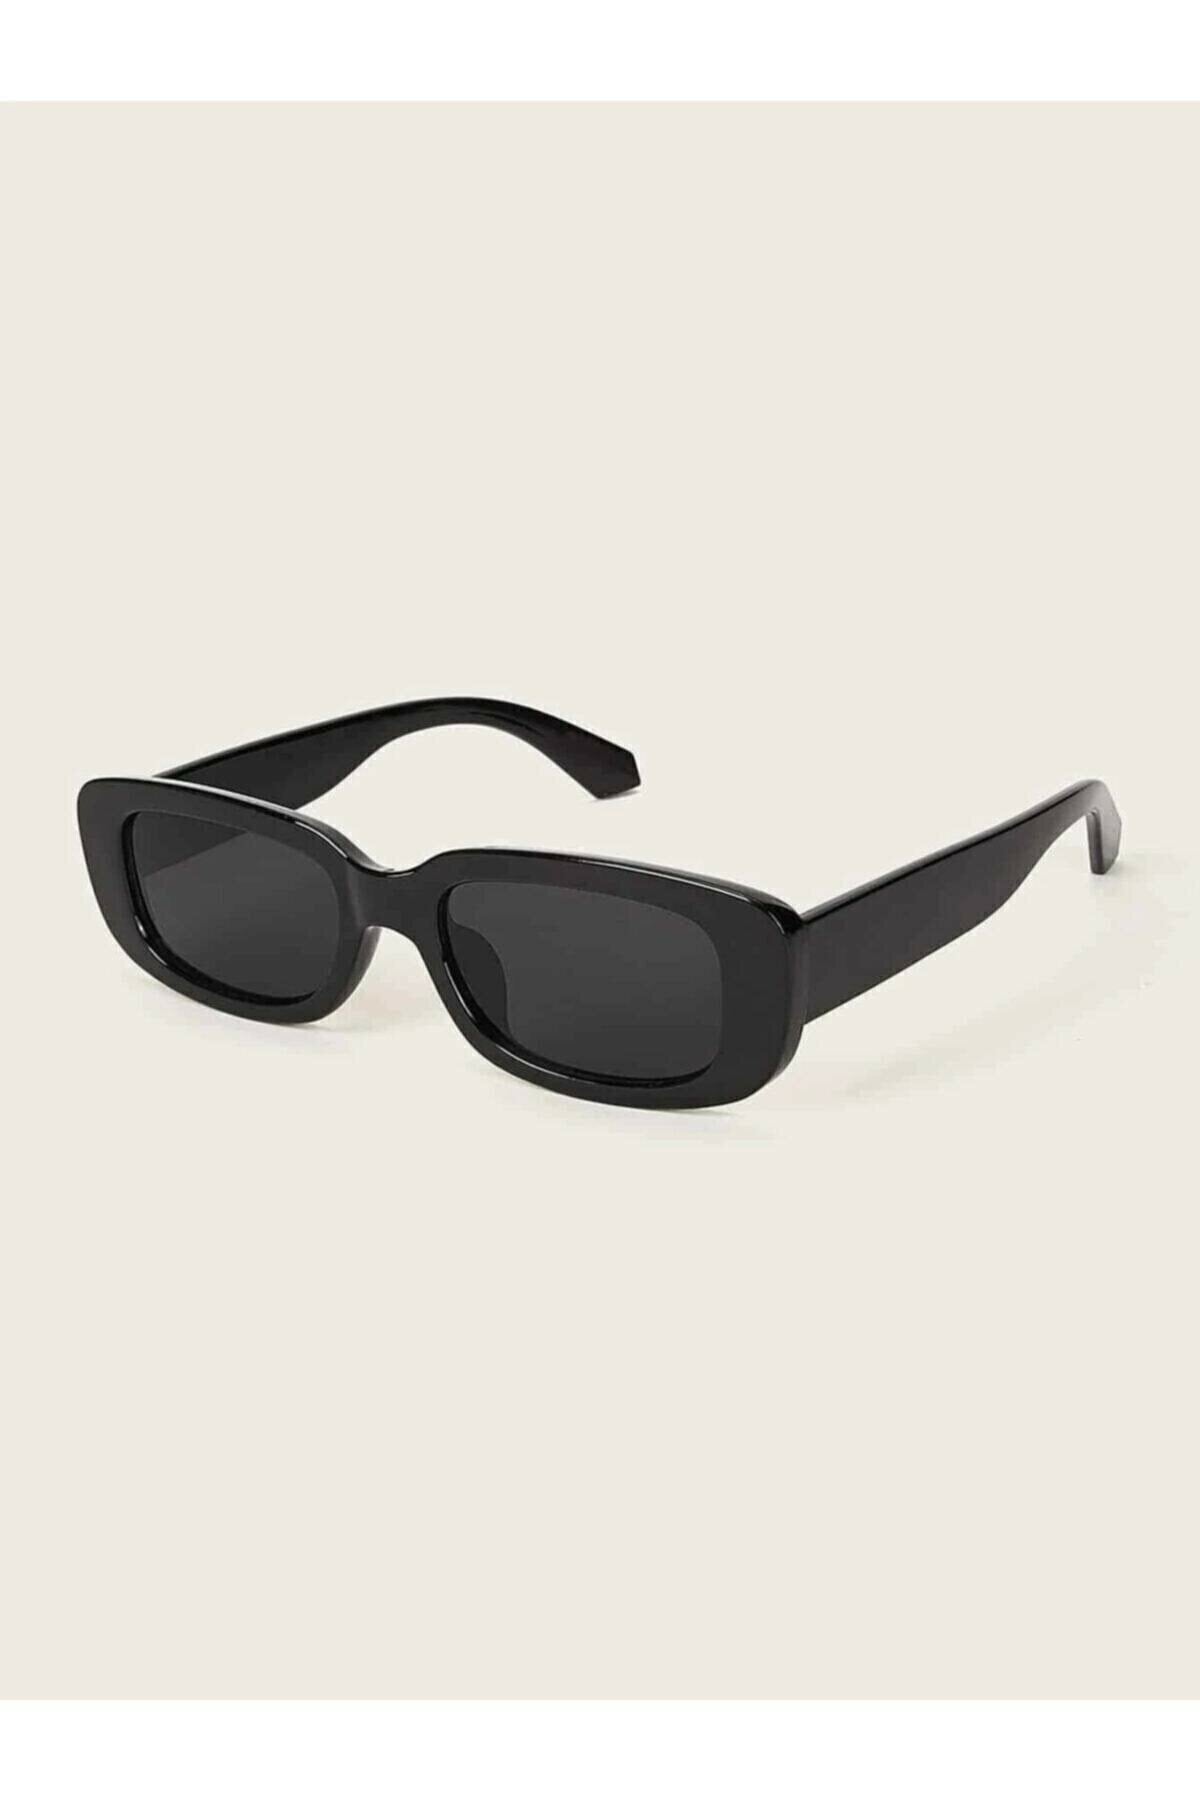 Unisex Black Square Rectangle Vintage-retro Sunglasses